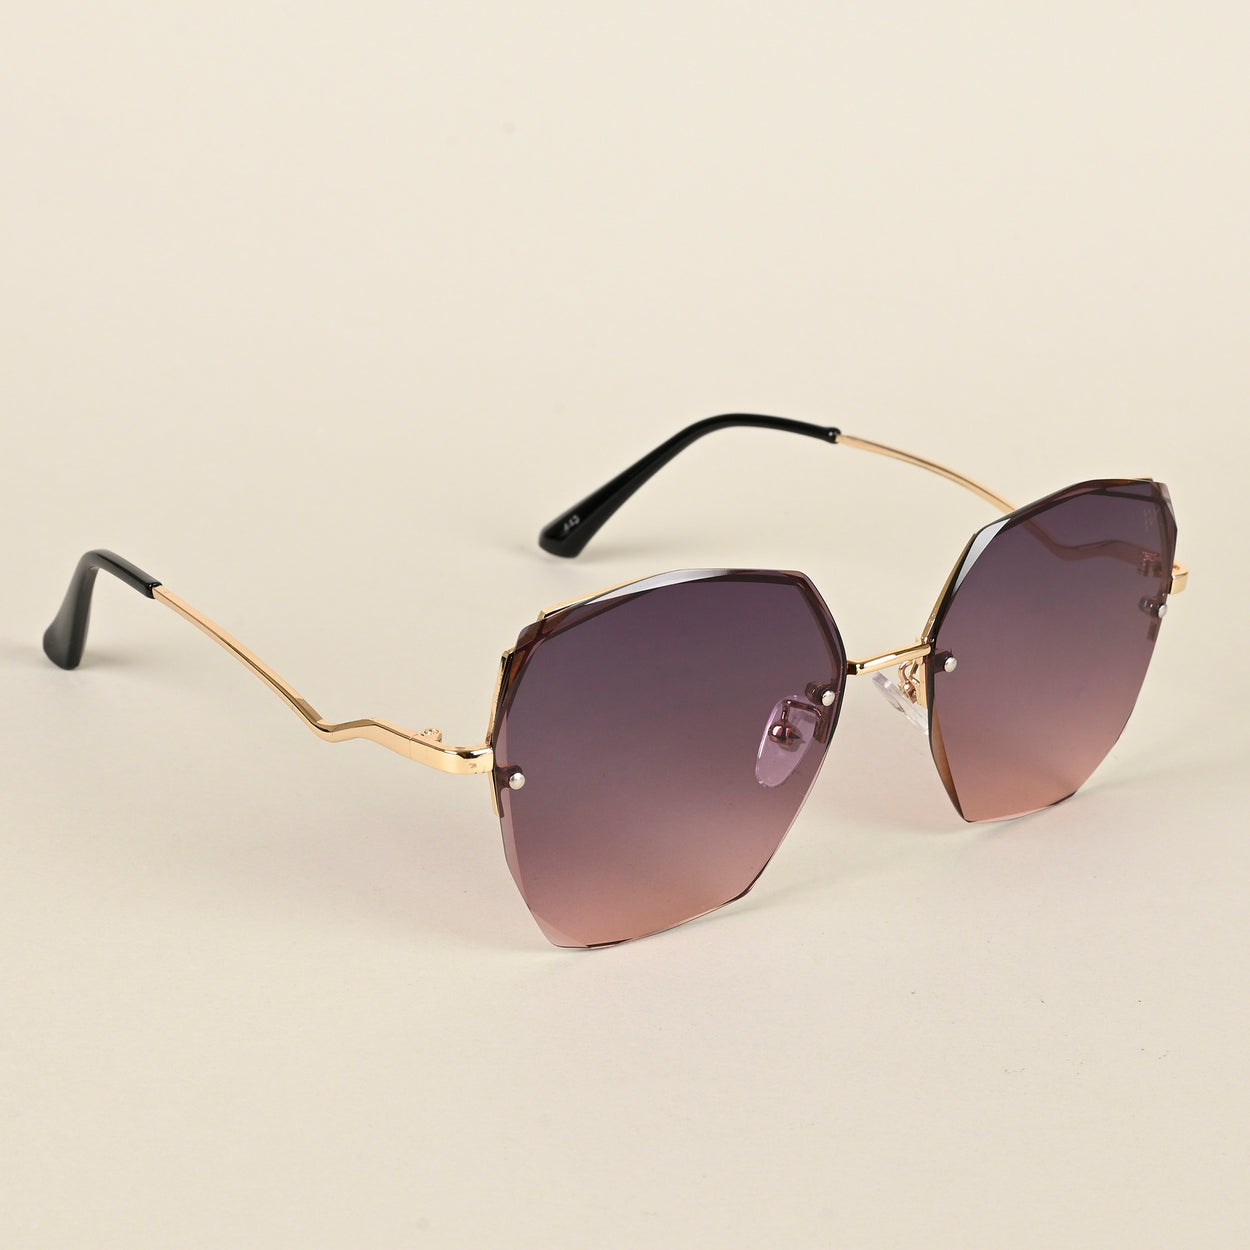 Voyage Grey & Pink Geometric Sunglasses for Women (443MG4336)